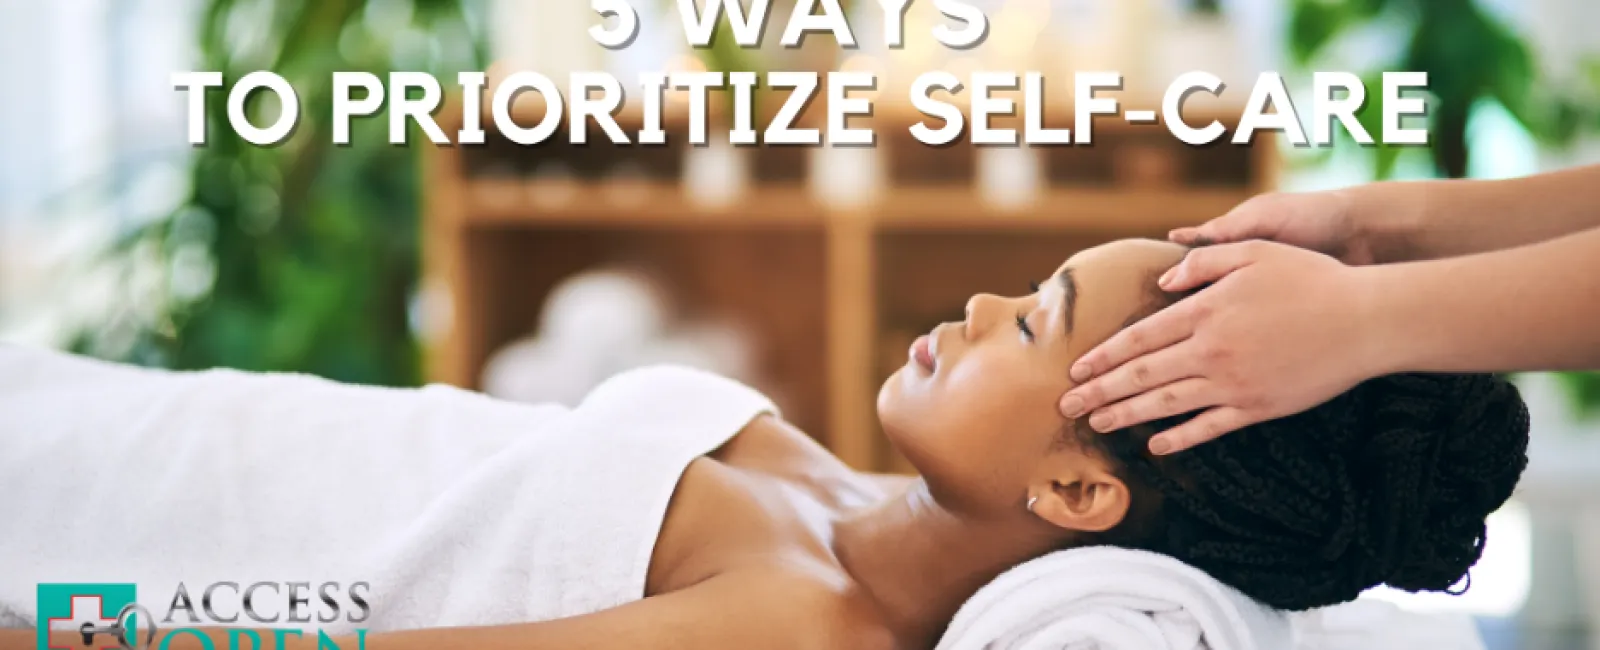 5 Ways to Prioritize Self-Care